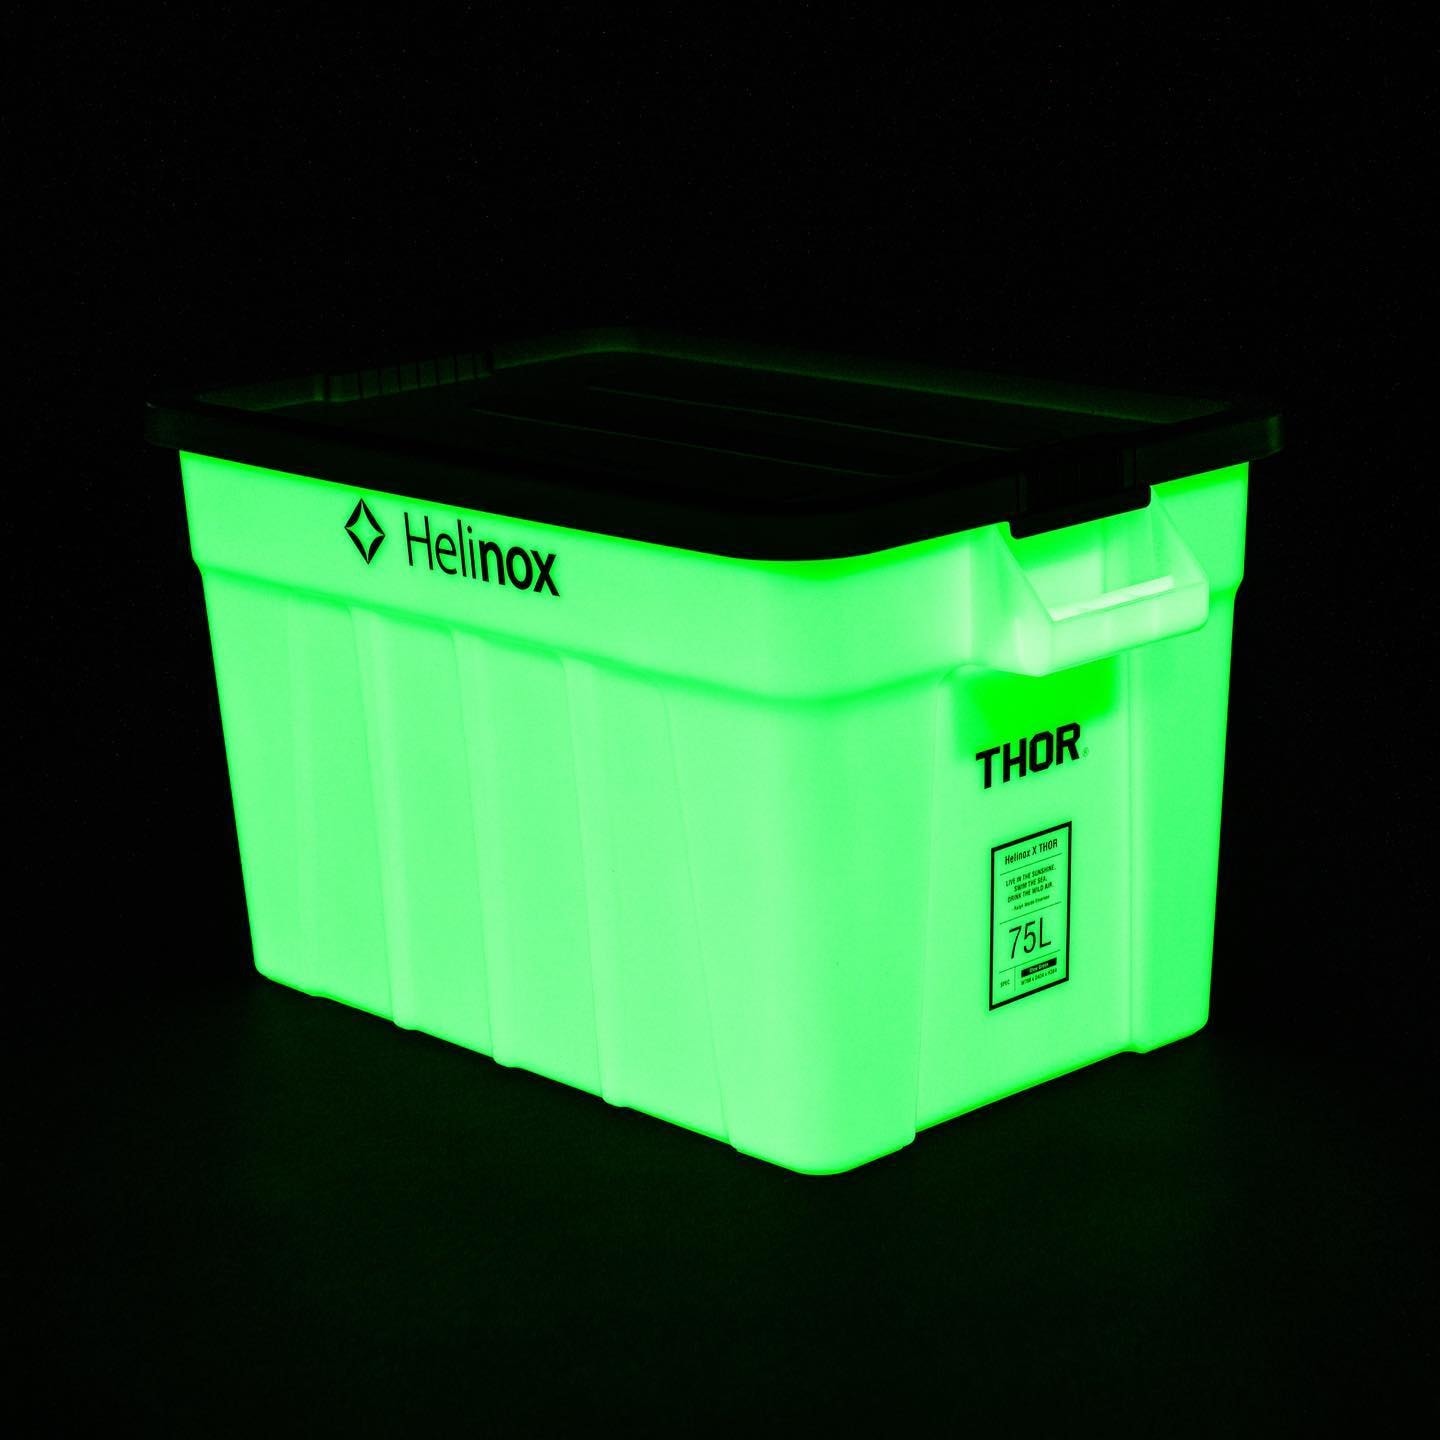 Helinox 2023 夏季系列「Glow Edition」正式发布